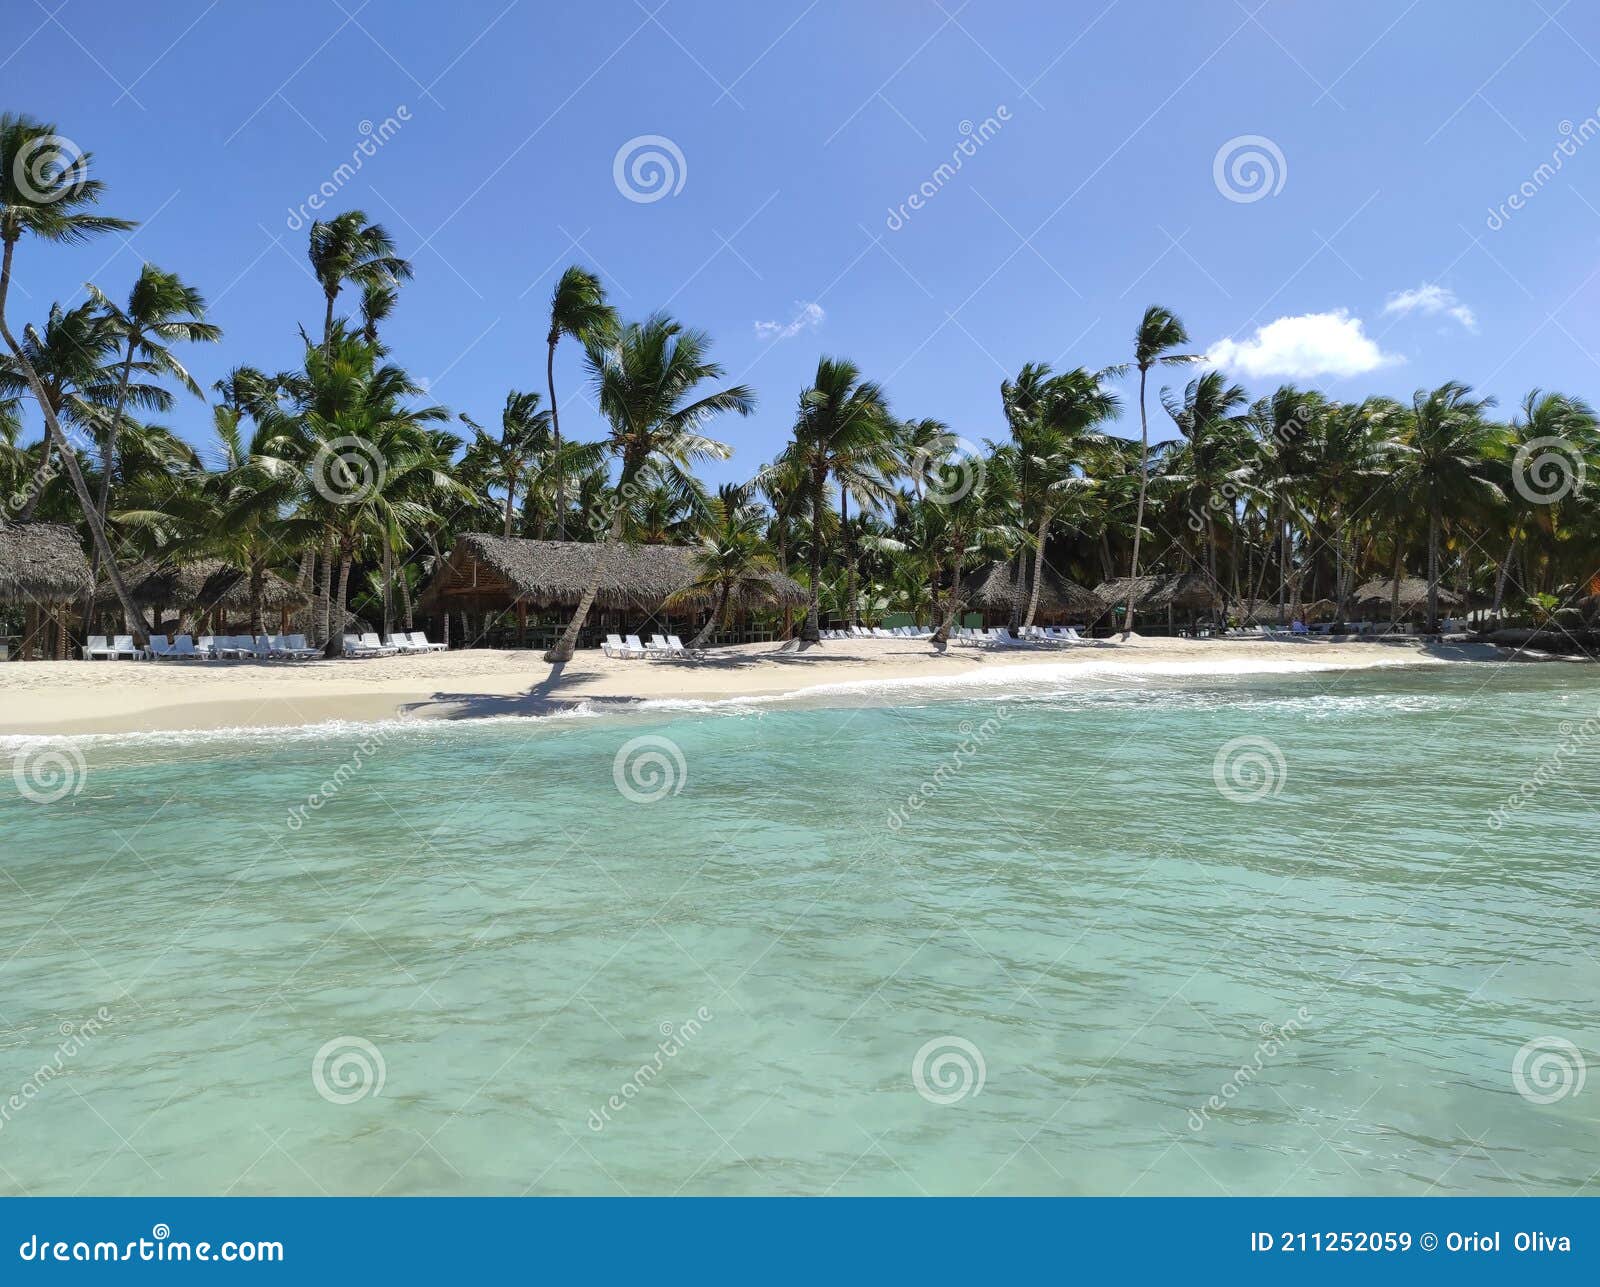 beach in the caribbean sea. punta cana. isla saona.